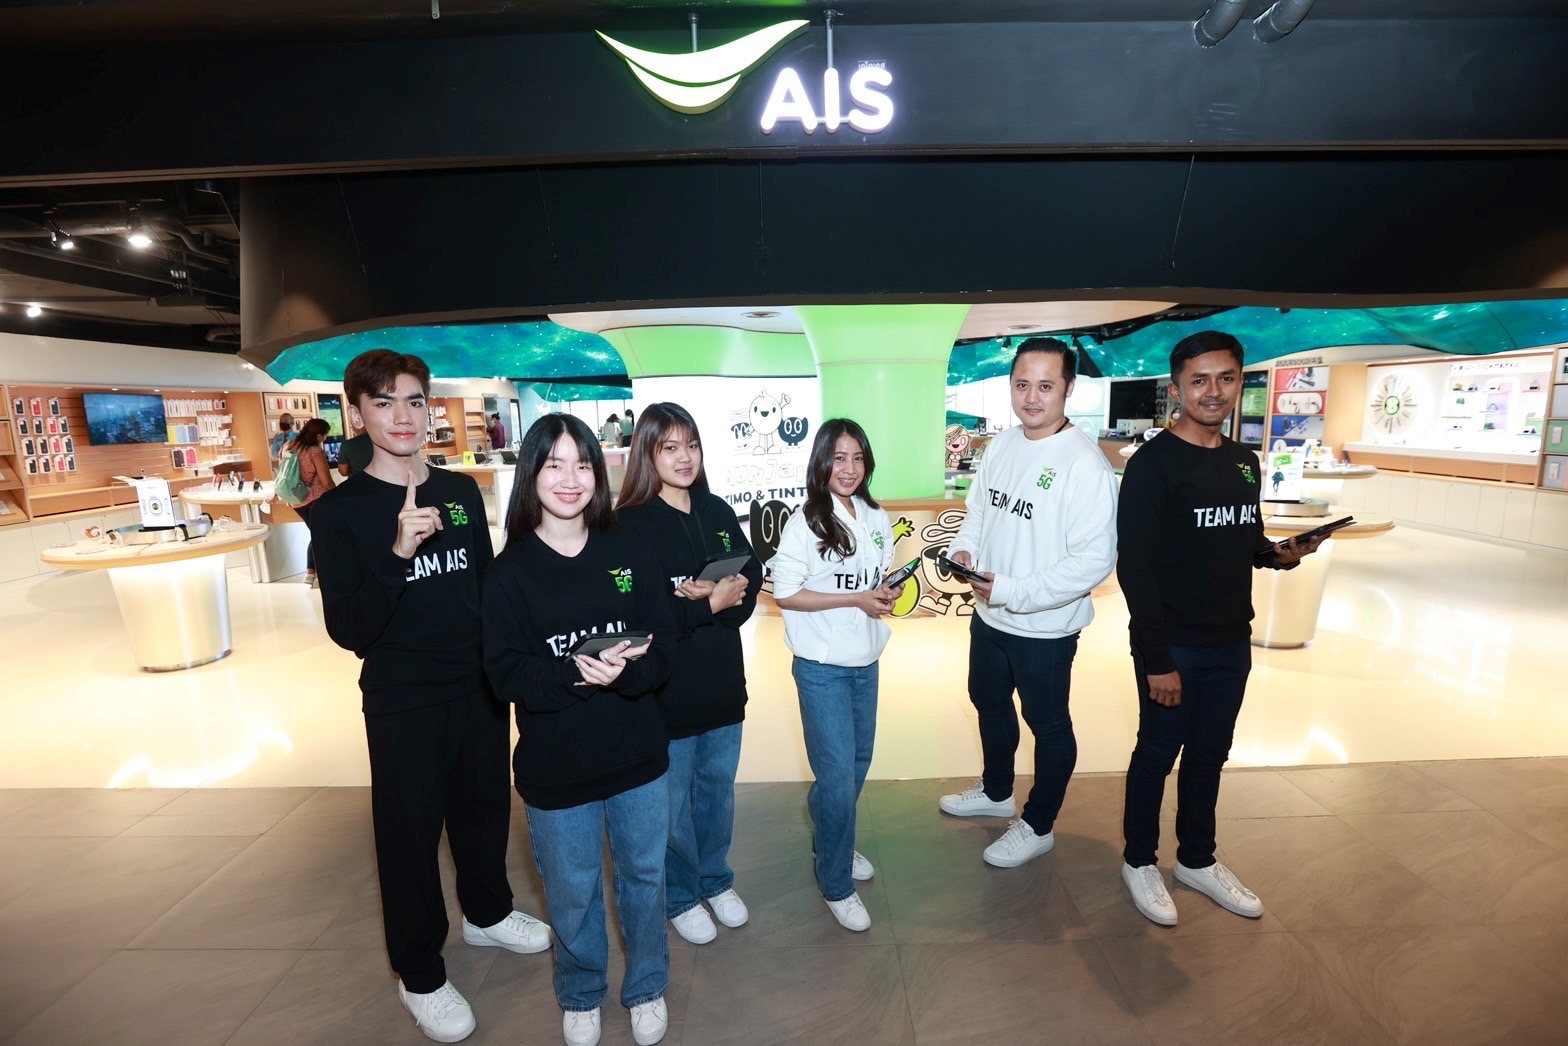 AIS เปิดตัว Flagship Store แนวคิด AIS THE YOUNIVERSE มอบประสบการณ์ Digital Lifestyle Community เพื่อคนรุ่นใหม่ใจกลางสยาม